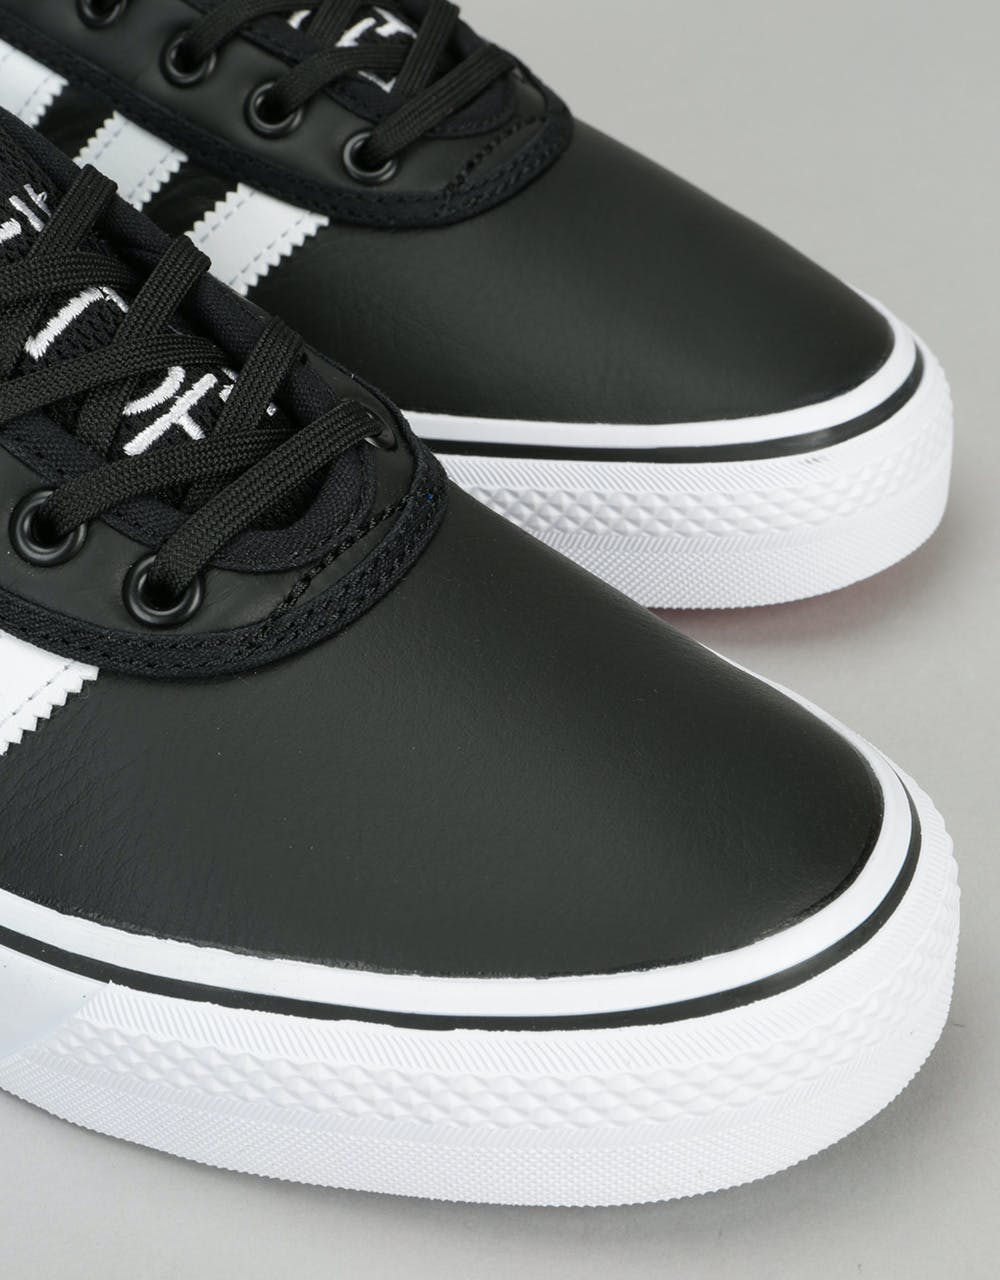 Adidas x Daewon Adi-Ease Skate Shoes - Black/White/Gold Metallic